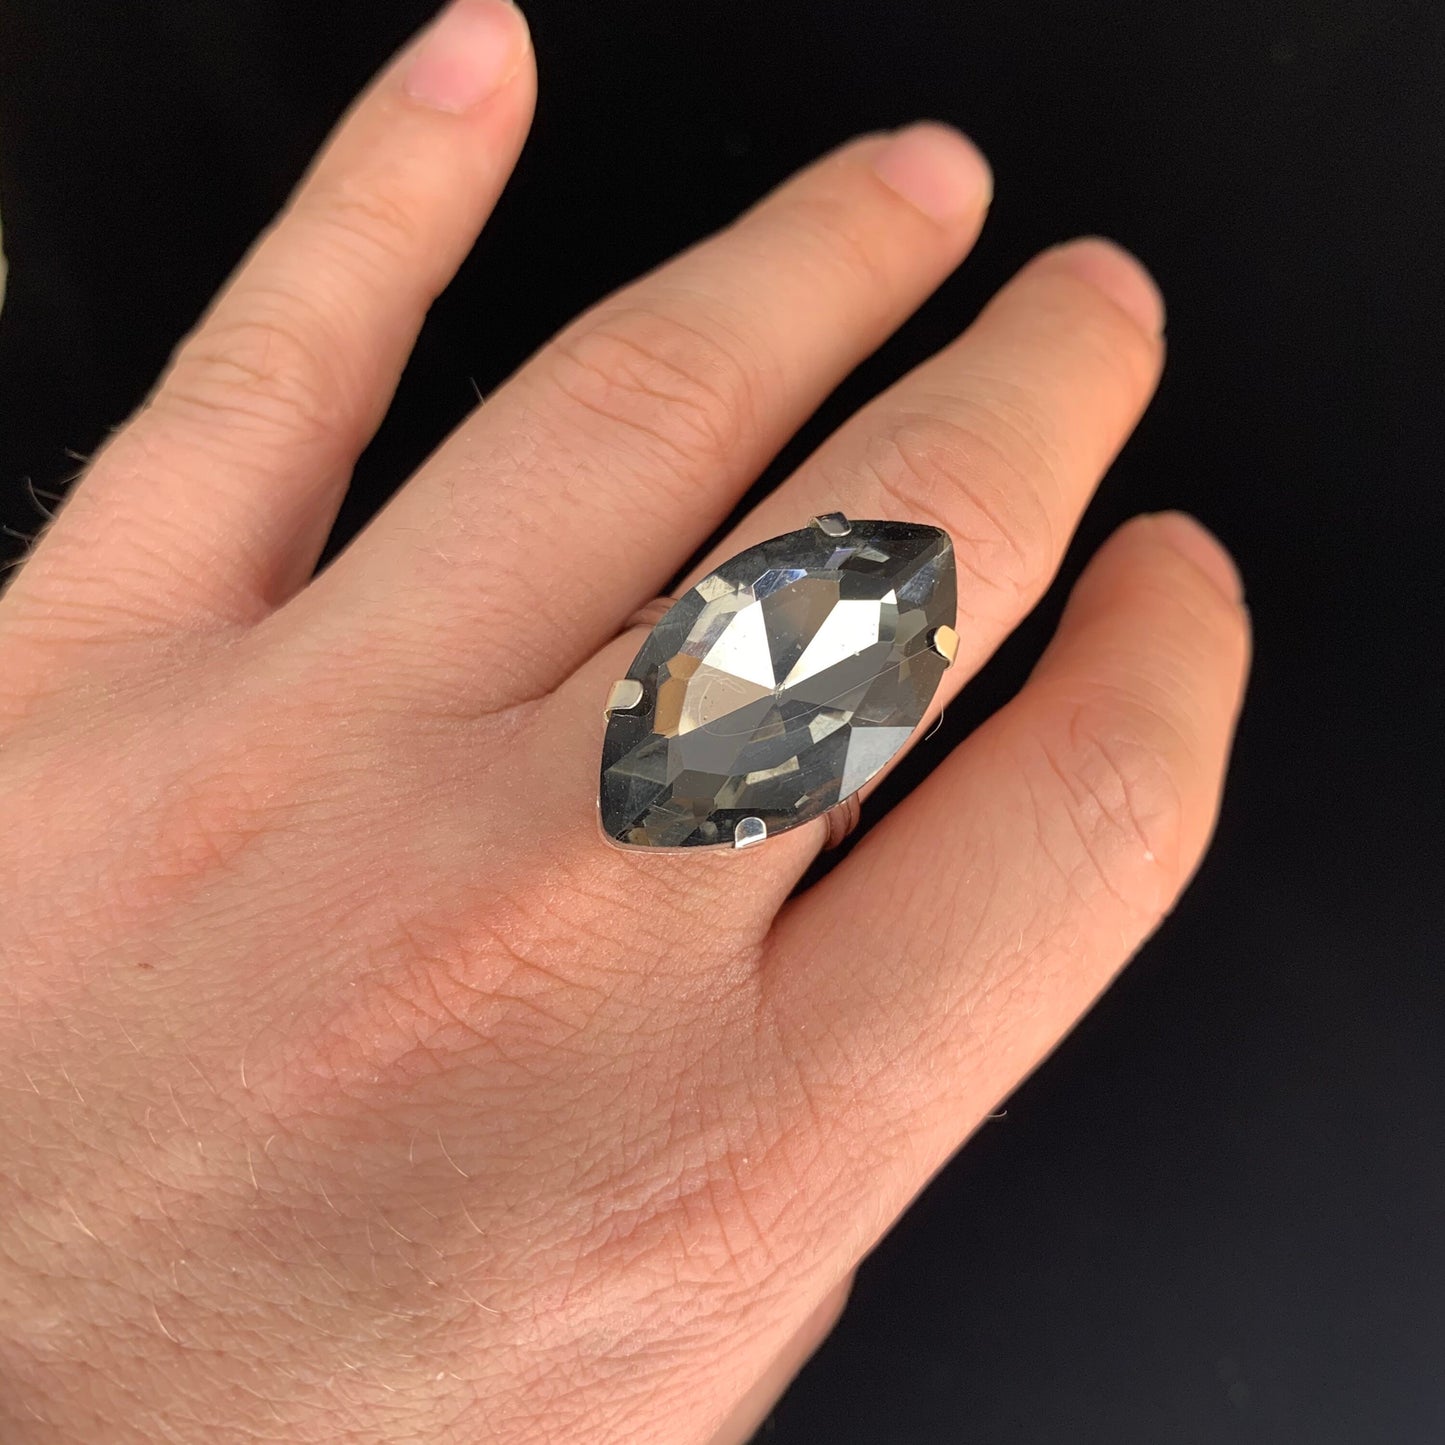 Crystal horse eye Ring / Cocktail Dress Ring / Adjustable back / Gift / Drag Queen Ring